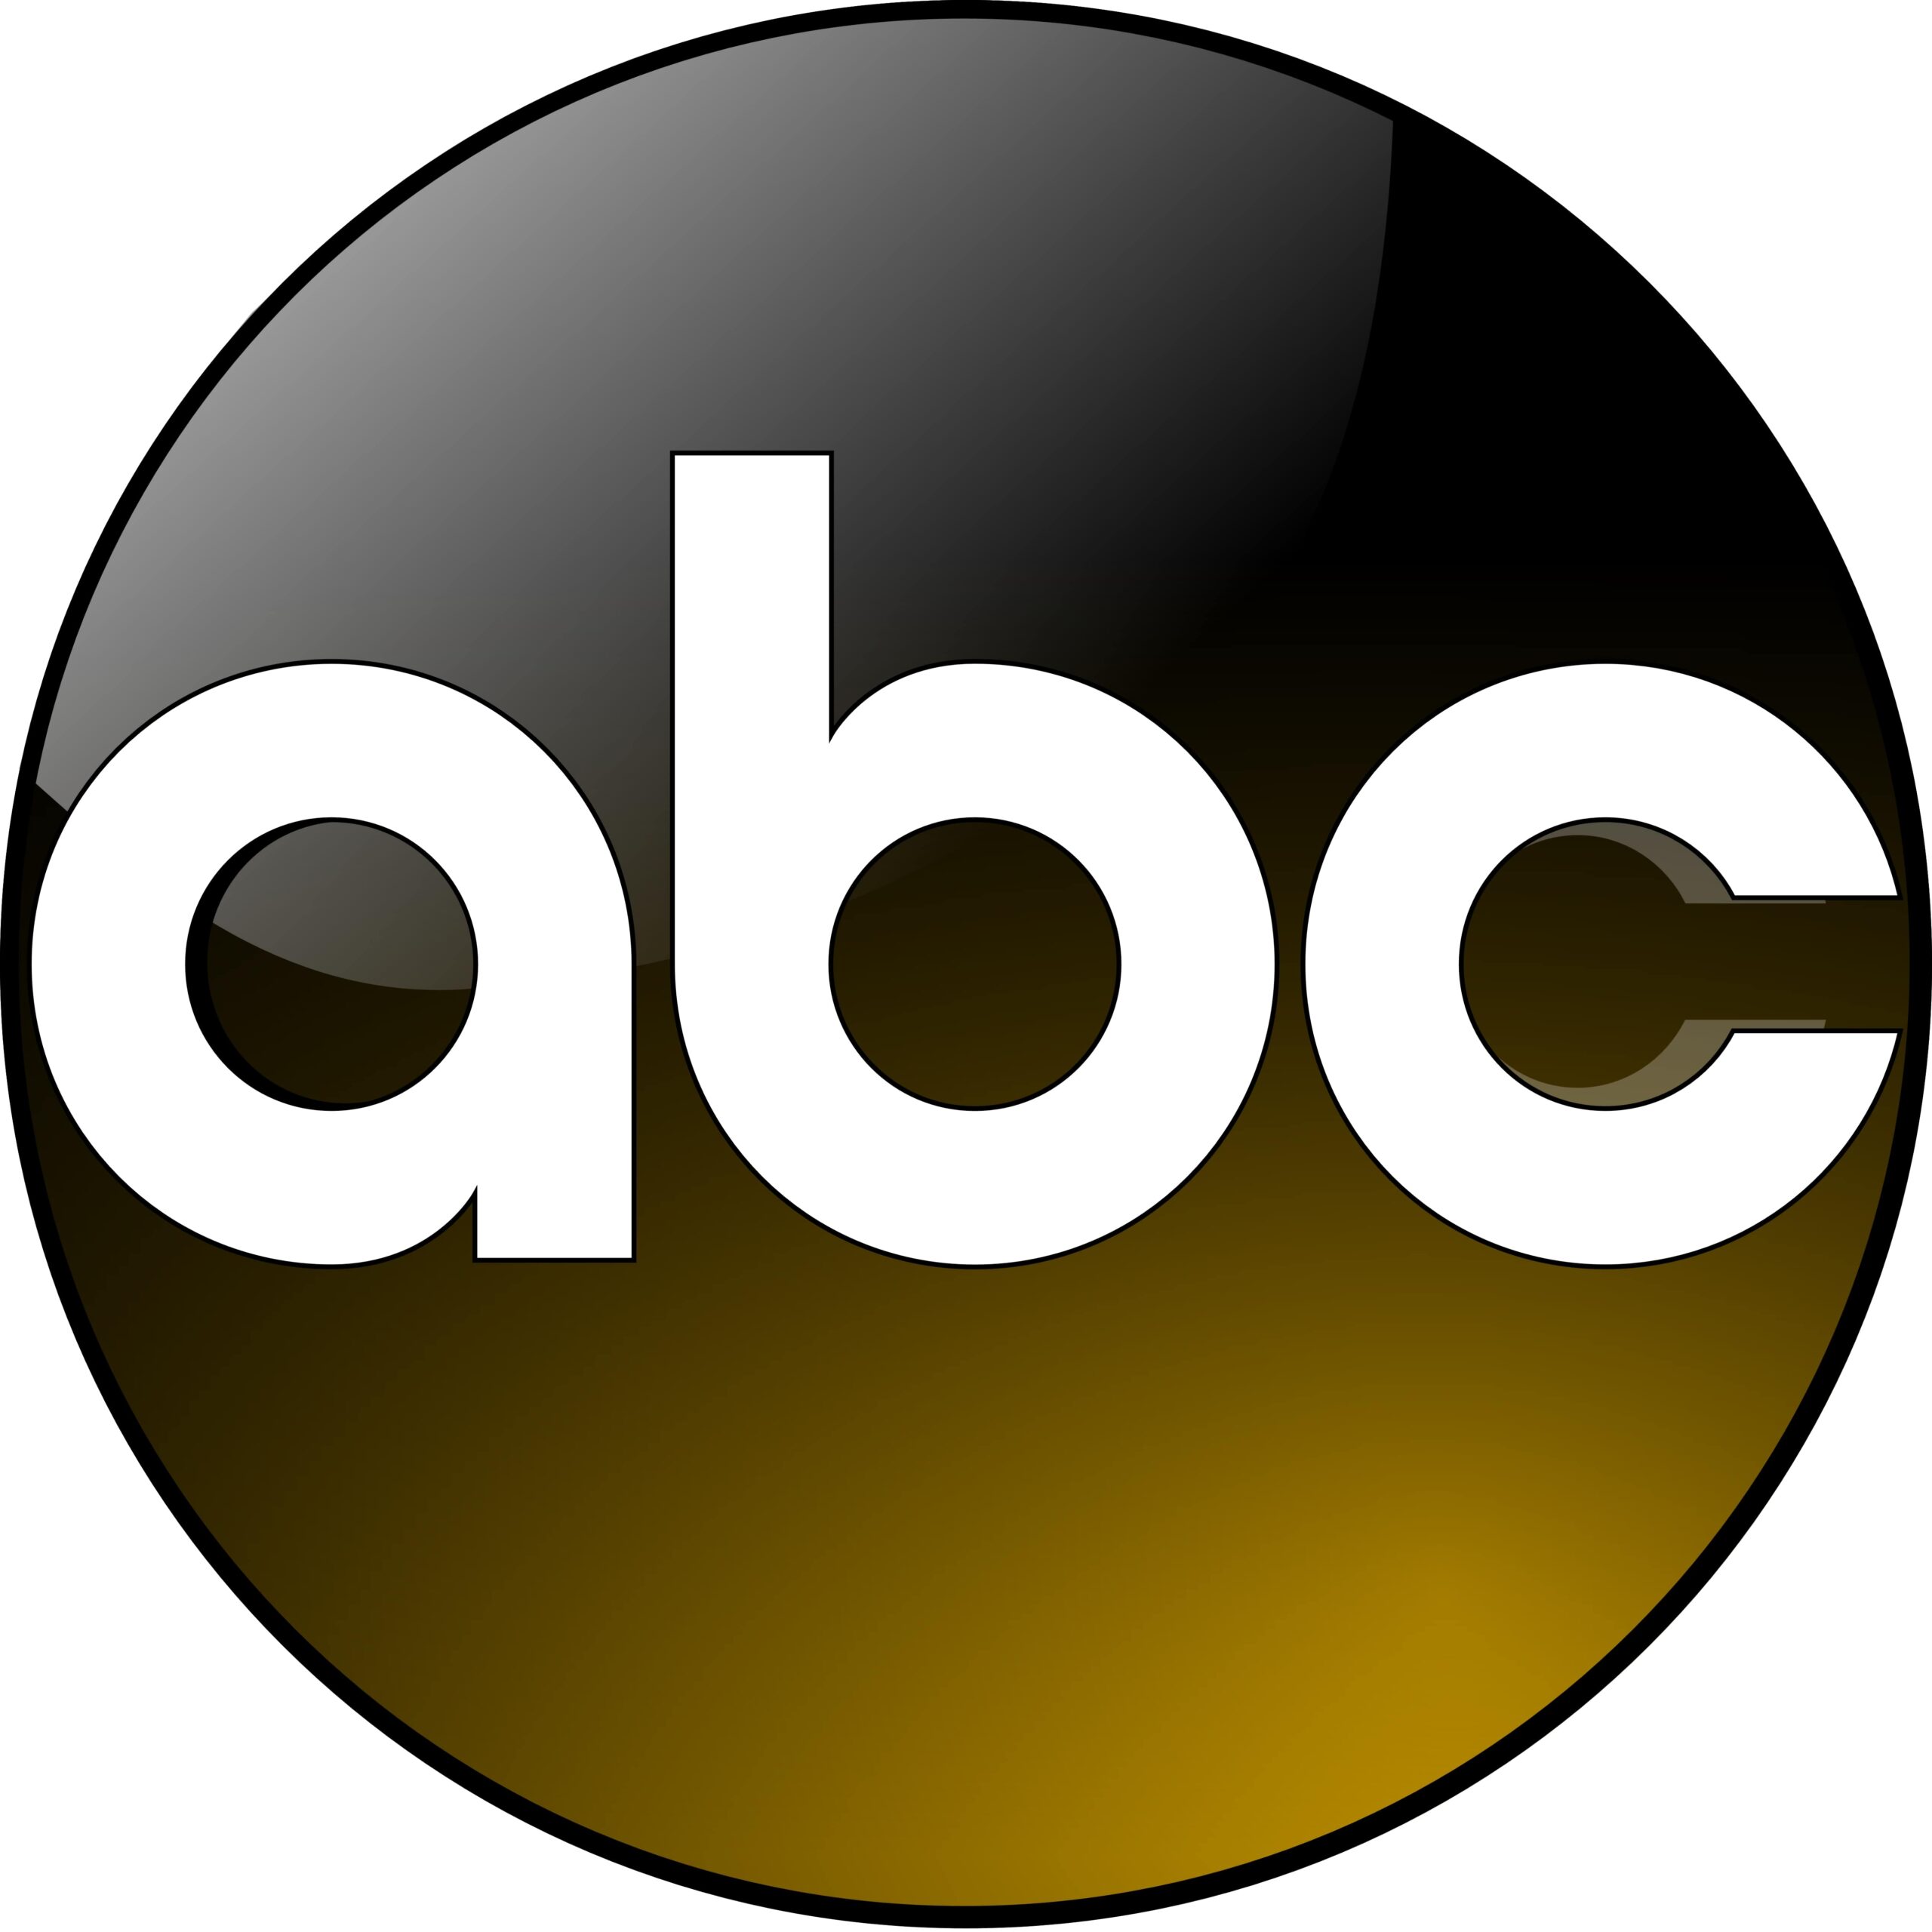 ABC Show Renewals 2023